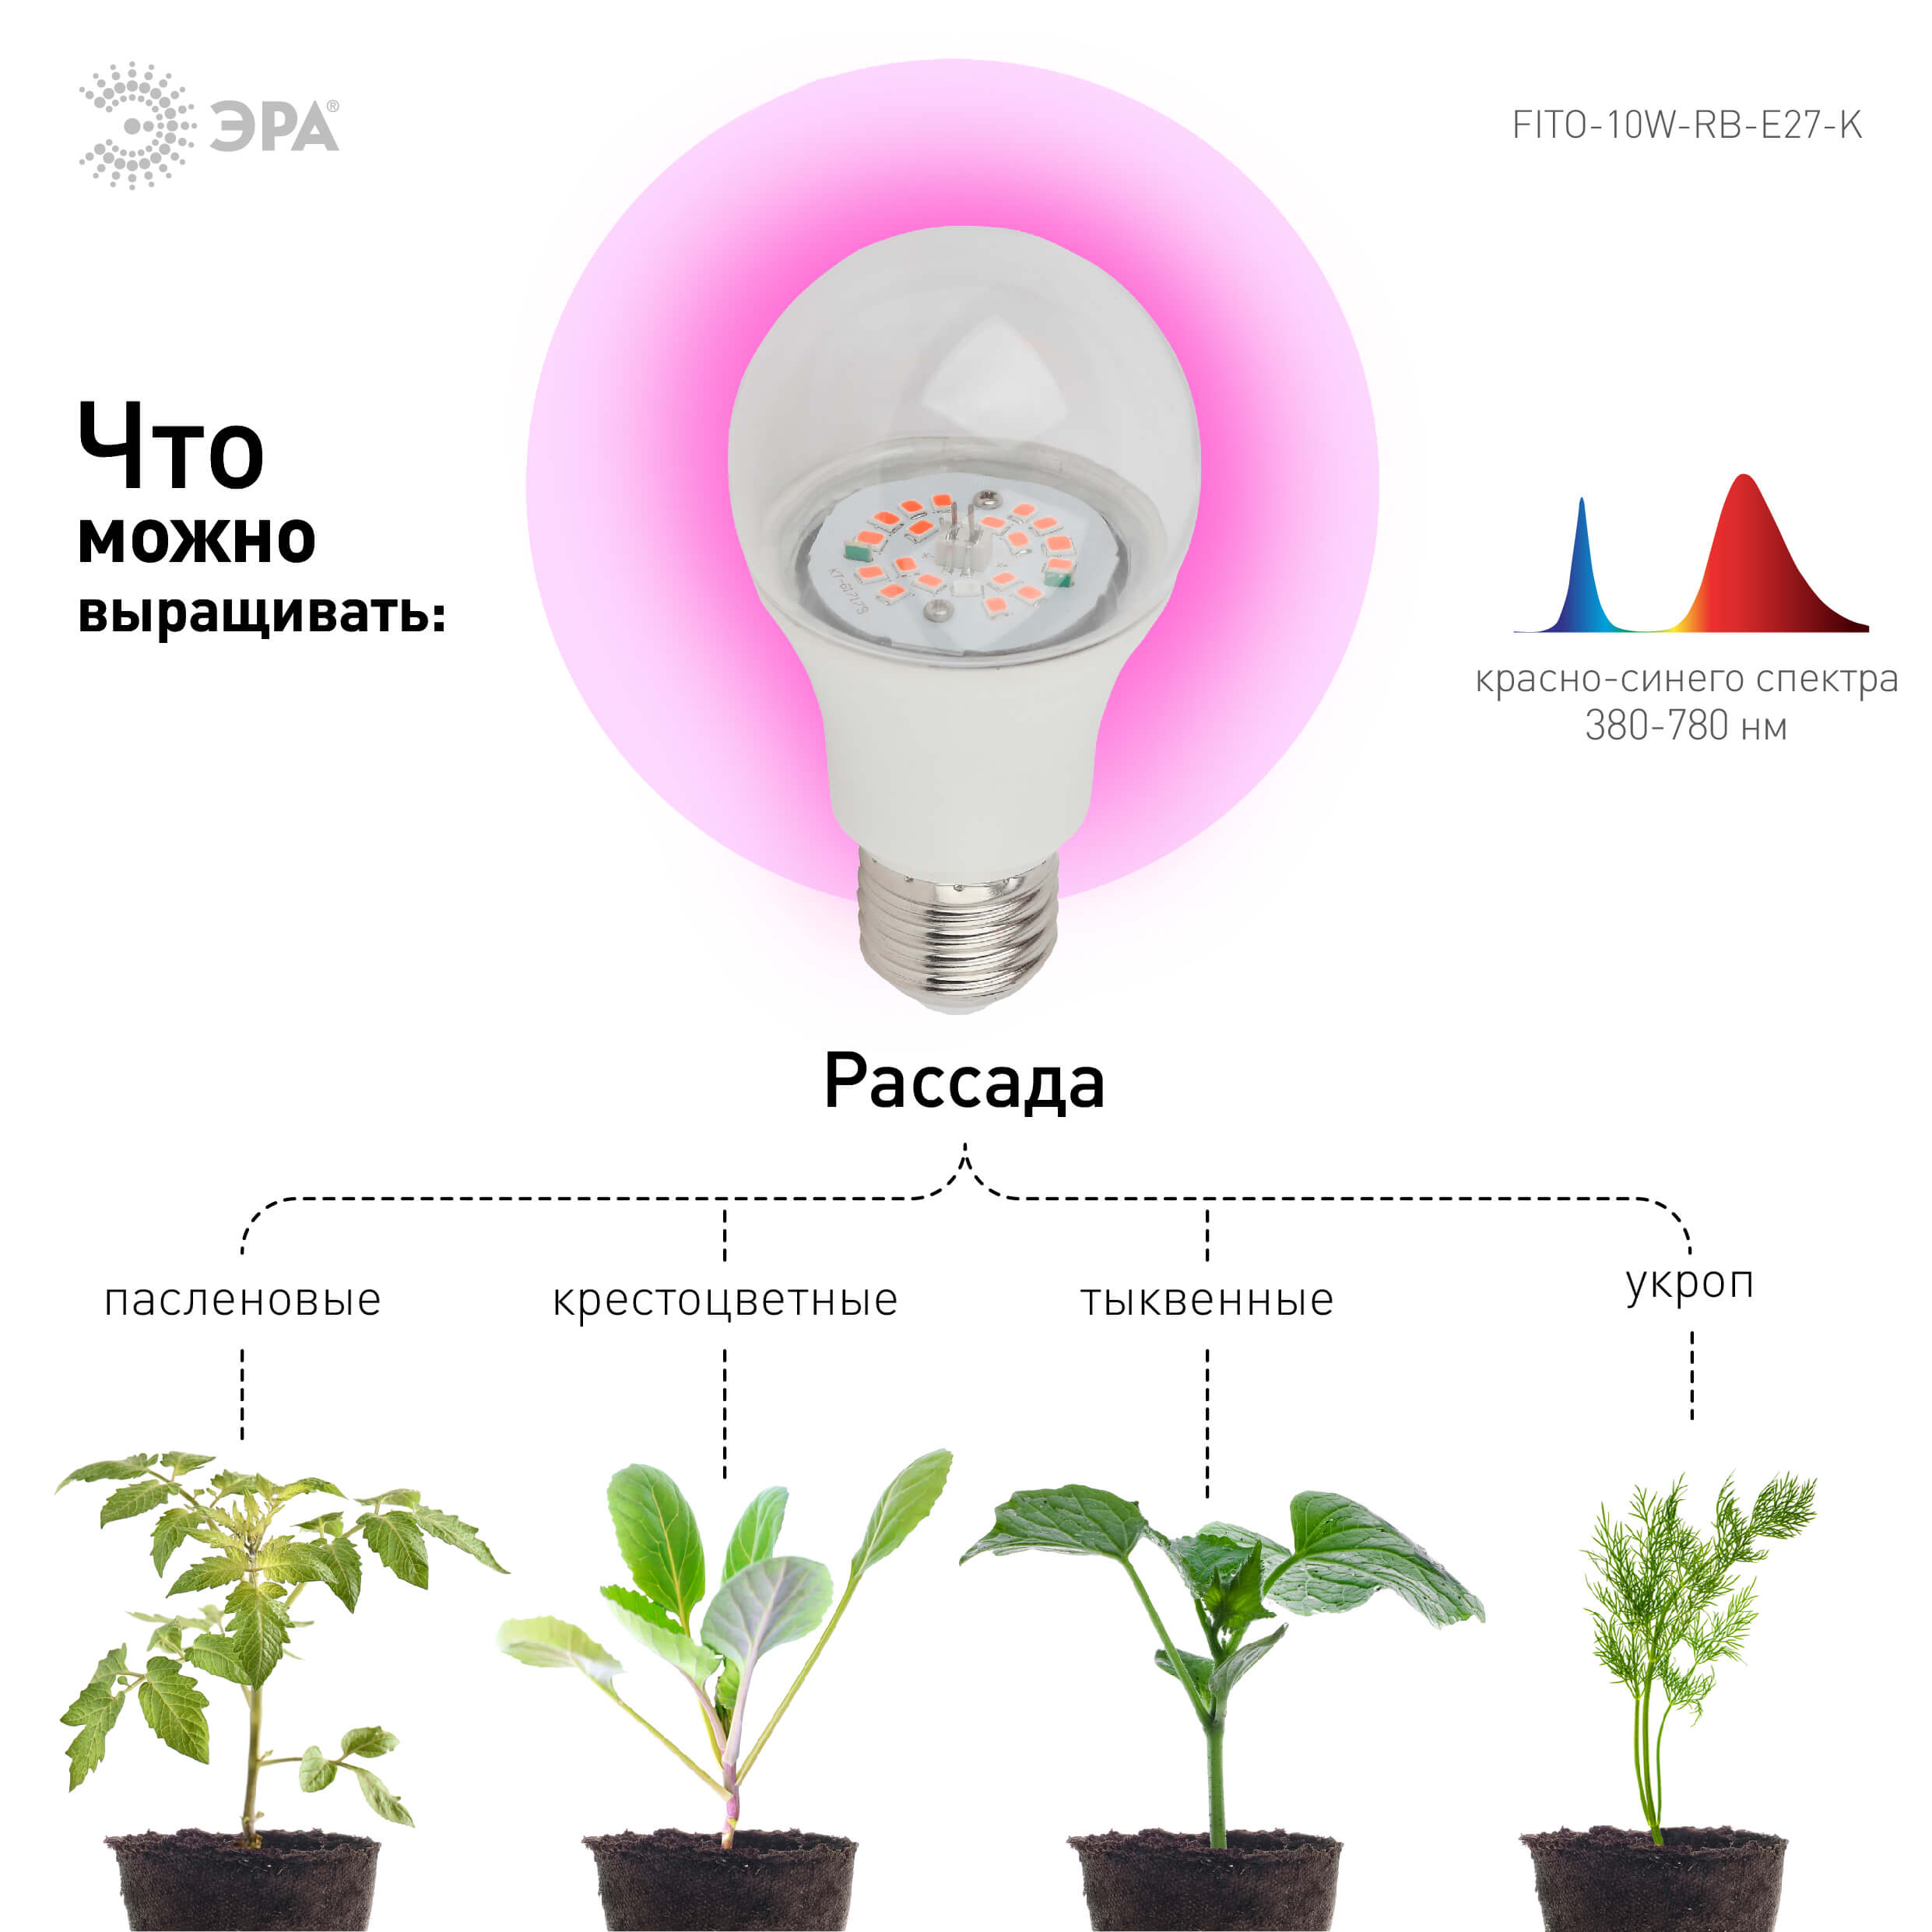 Фитолампа для растений светодиодная ЭРА E27 10W 1310K FITO-10W-RB-E27-K Б0039069 в Москве